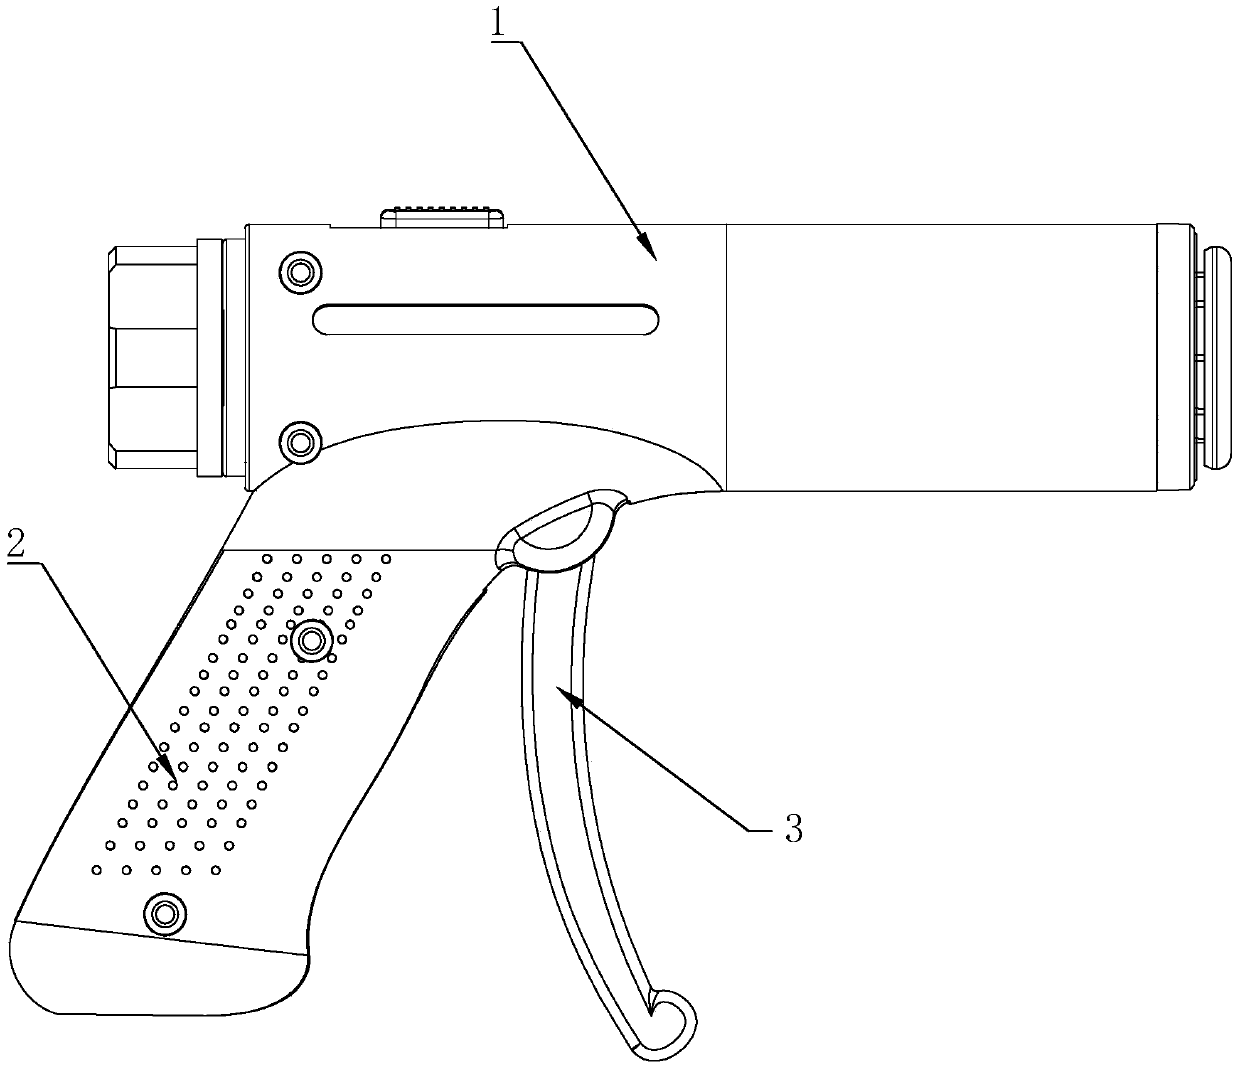 A gun-type circumcision stapler